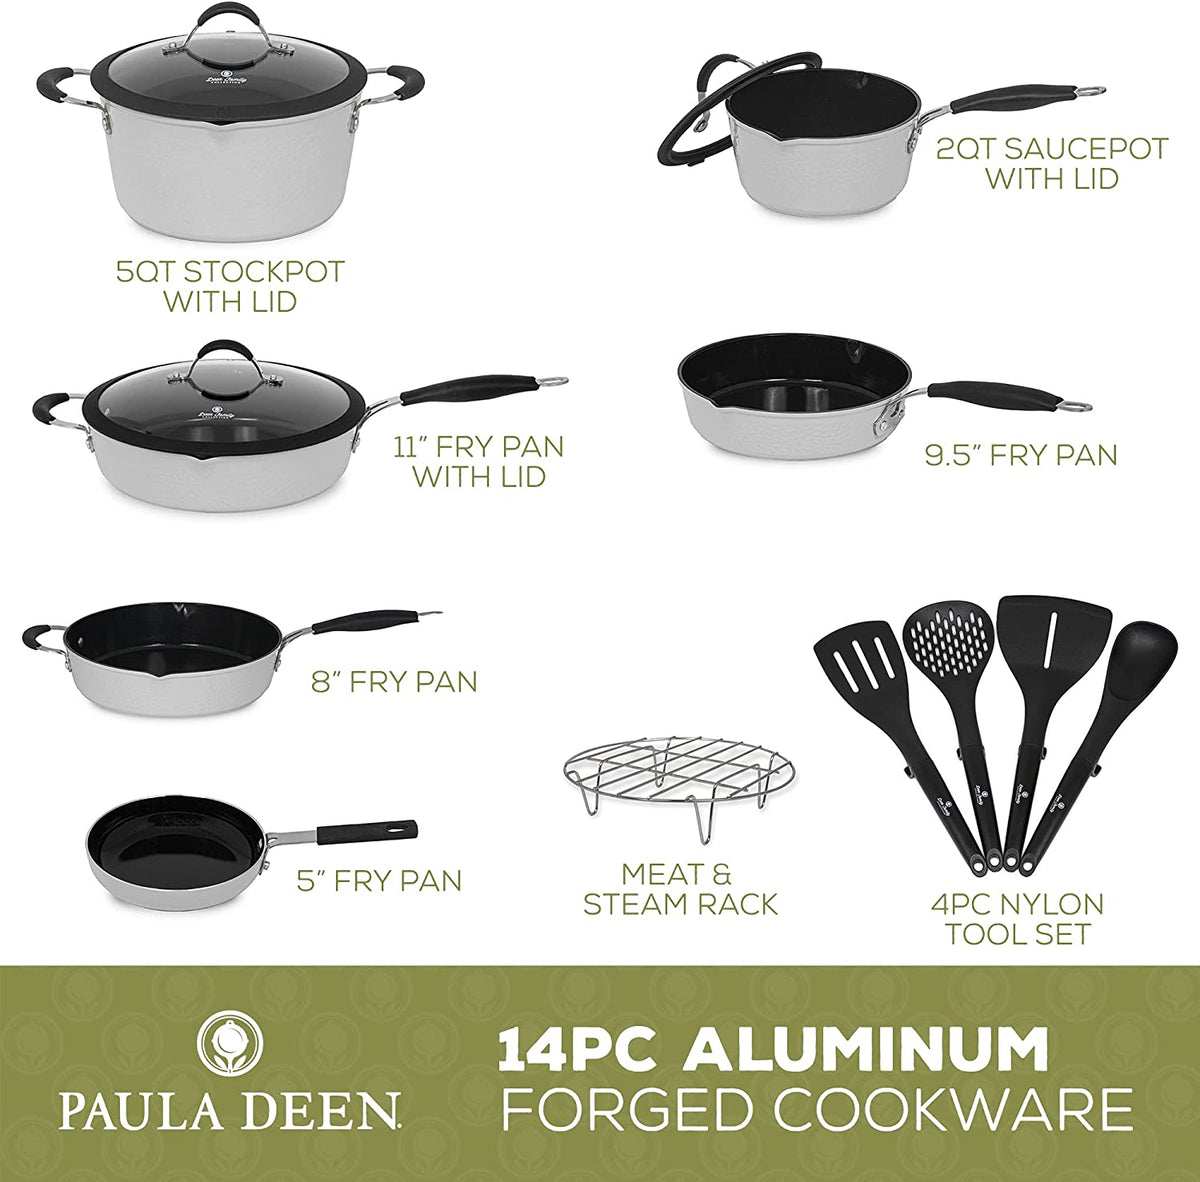 Beware Paula Deen's flaky cookware